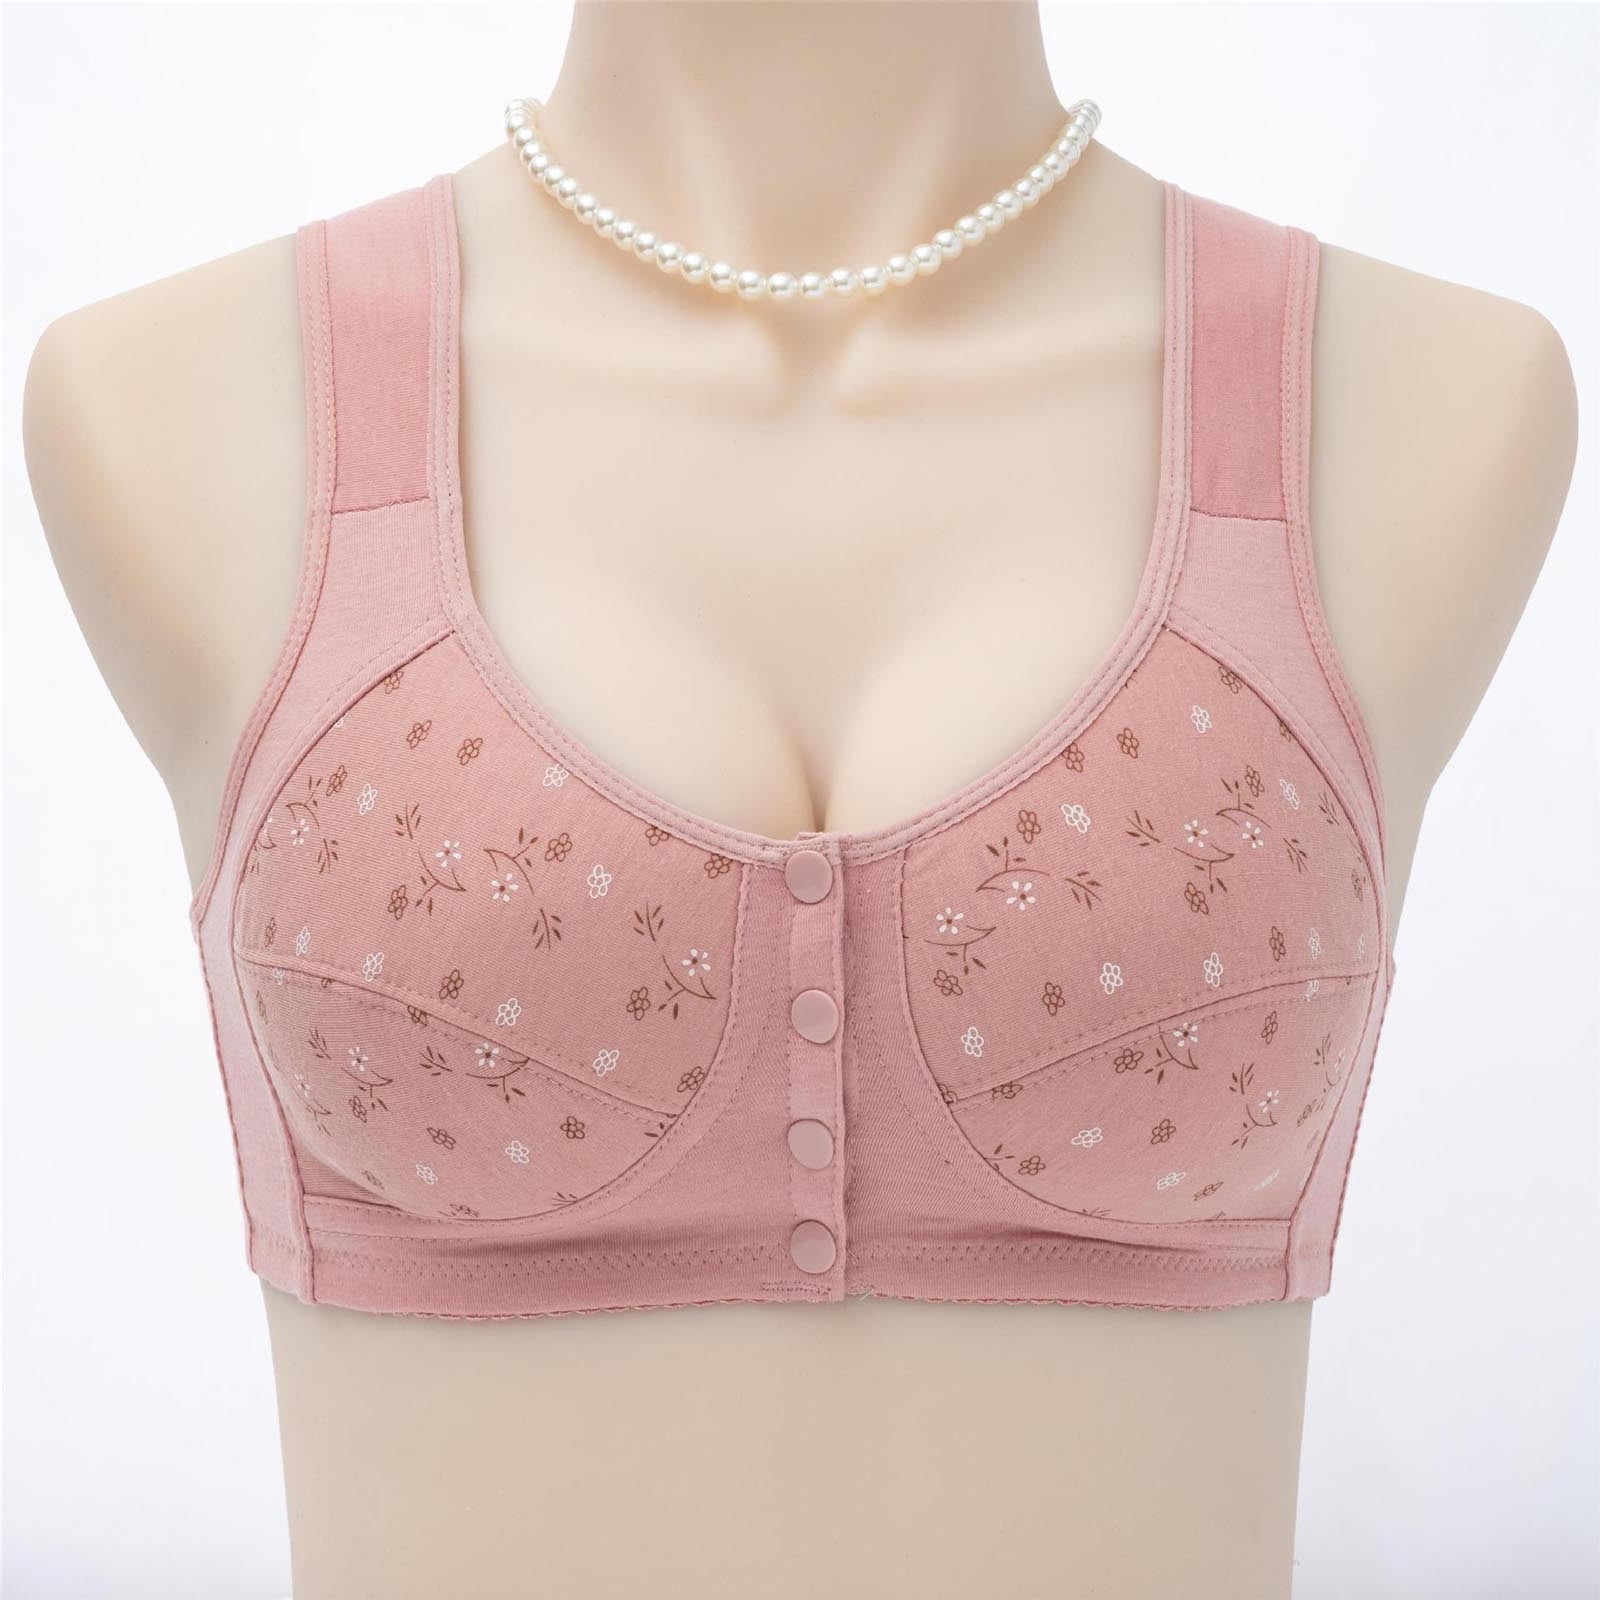 uublik Women Bras Plus Size Soft Wirefree Push Up Adjustable Bra Pink 